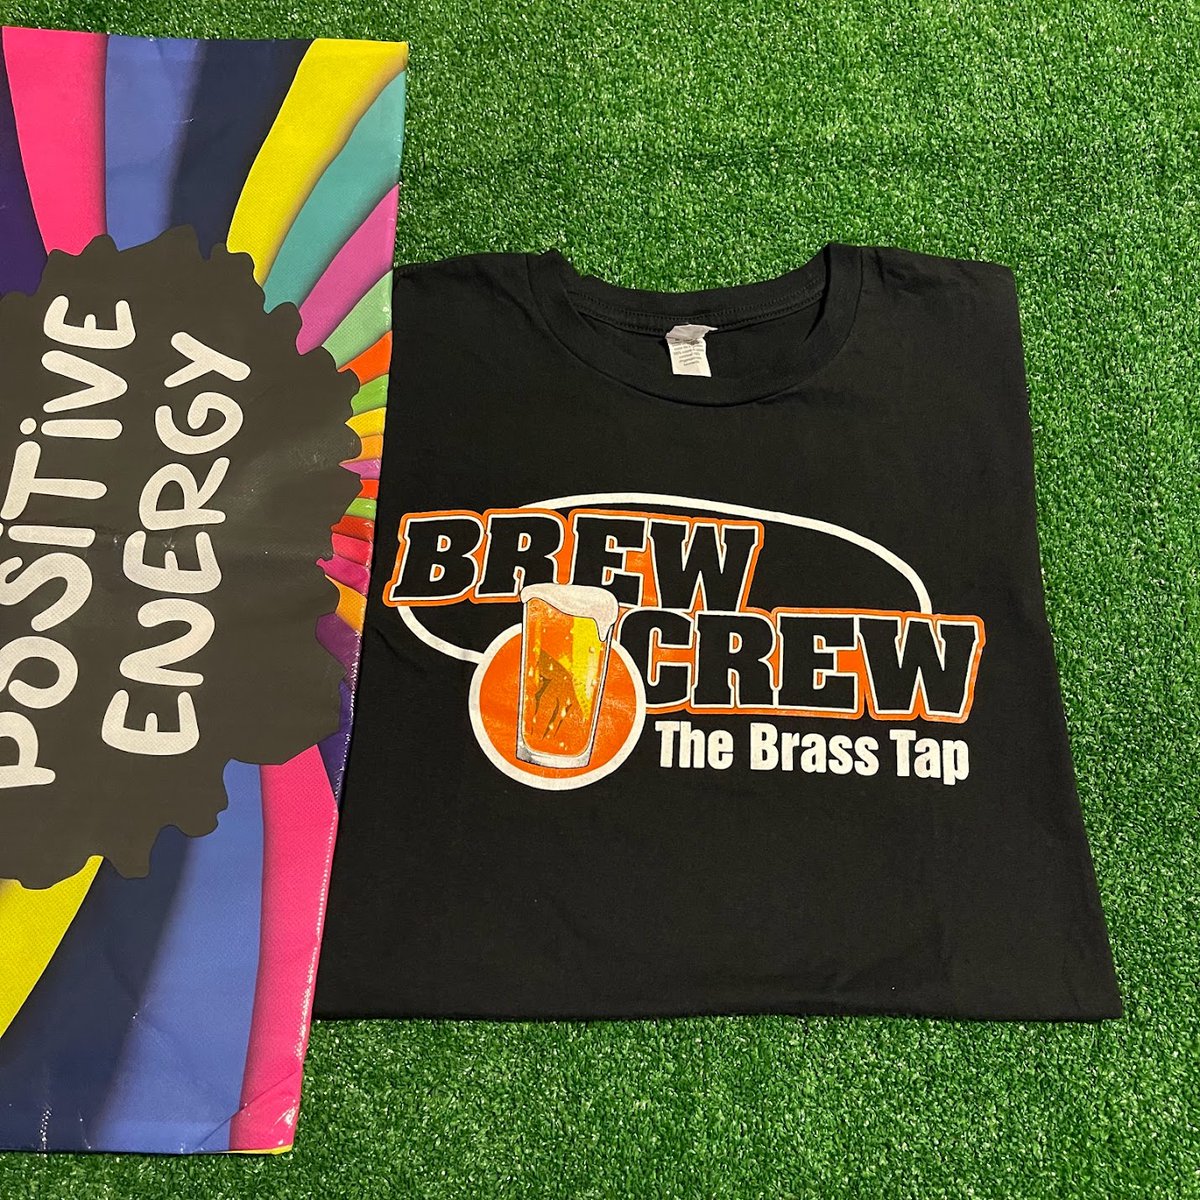 Anvil Brew Crew The Brass Tap Crew Neck Short Sleeve Black Casual T-Shirt Size M

#AnvilBrewCrew
#TheBrassTap
#BreweryTee
#CraftBeerFashion
#CrewNeckTee
#ShortSleeve
#BlackTshirt
#SizeM
#CasualWear
#BeerLoversFashion
ebay.com/itm/1263521828…